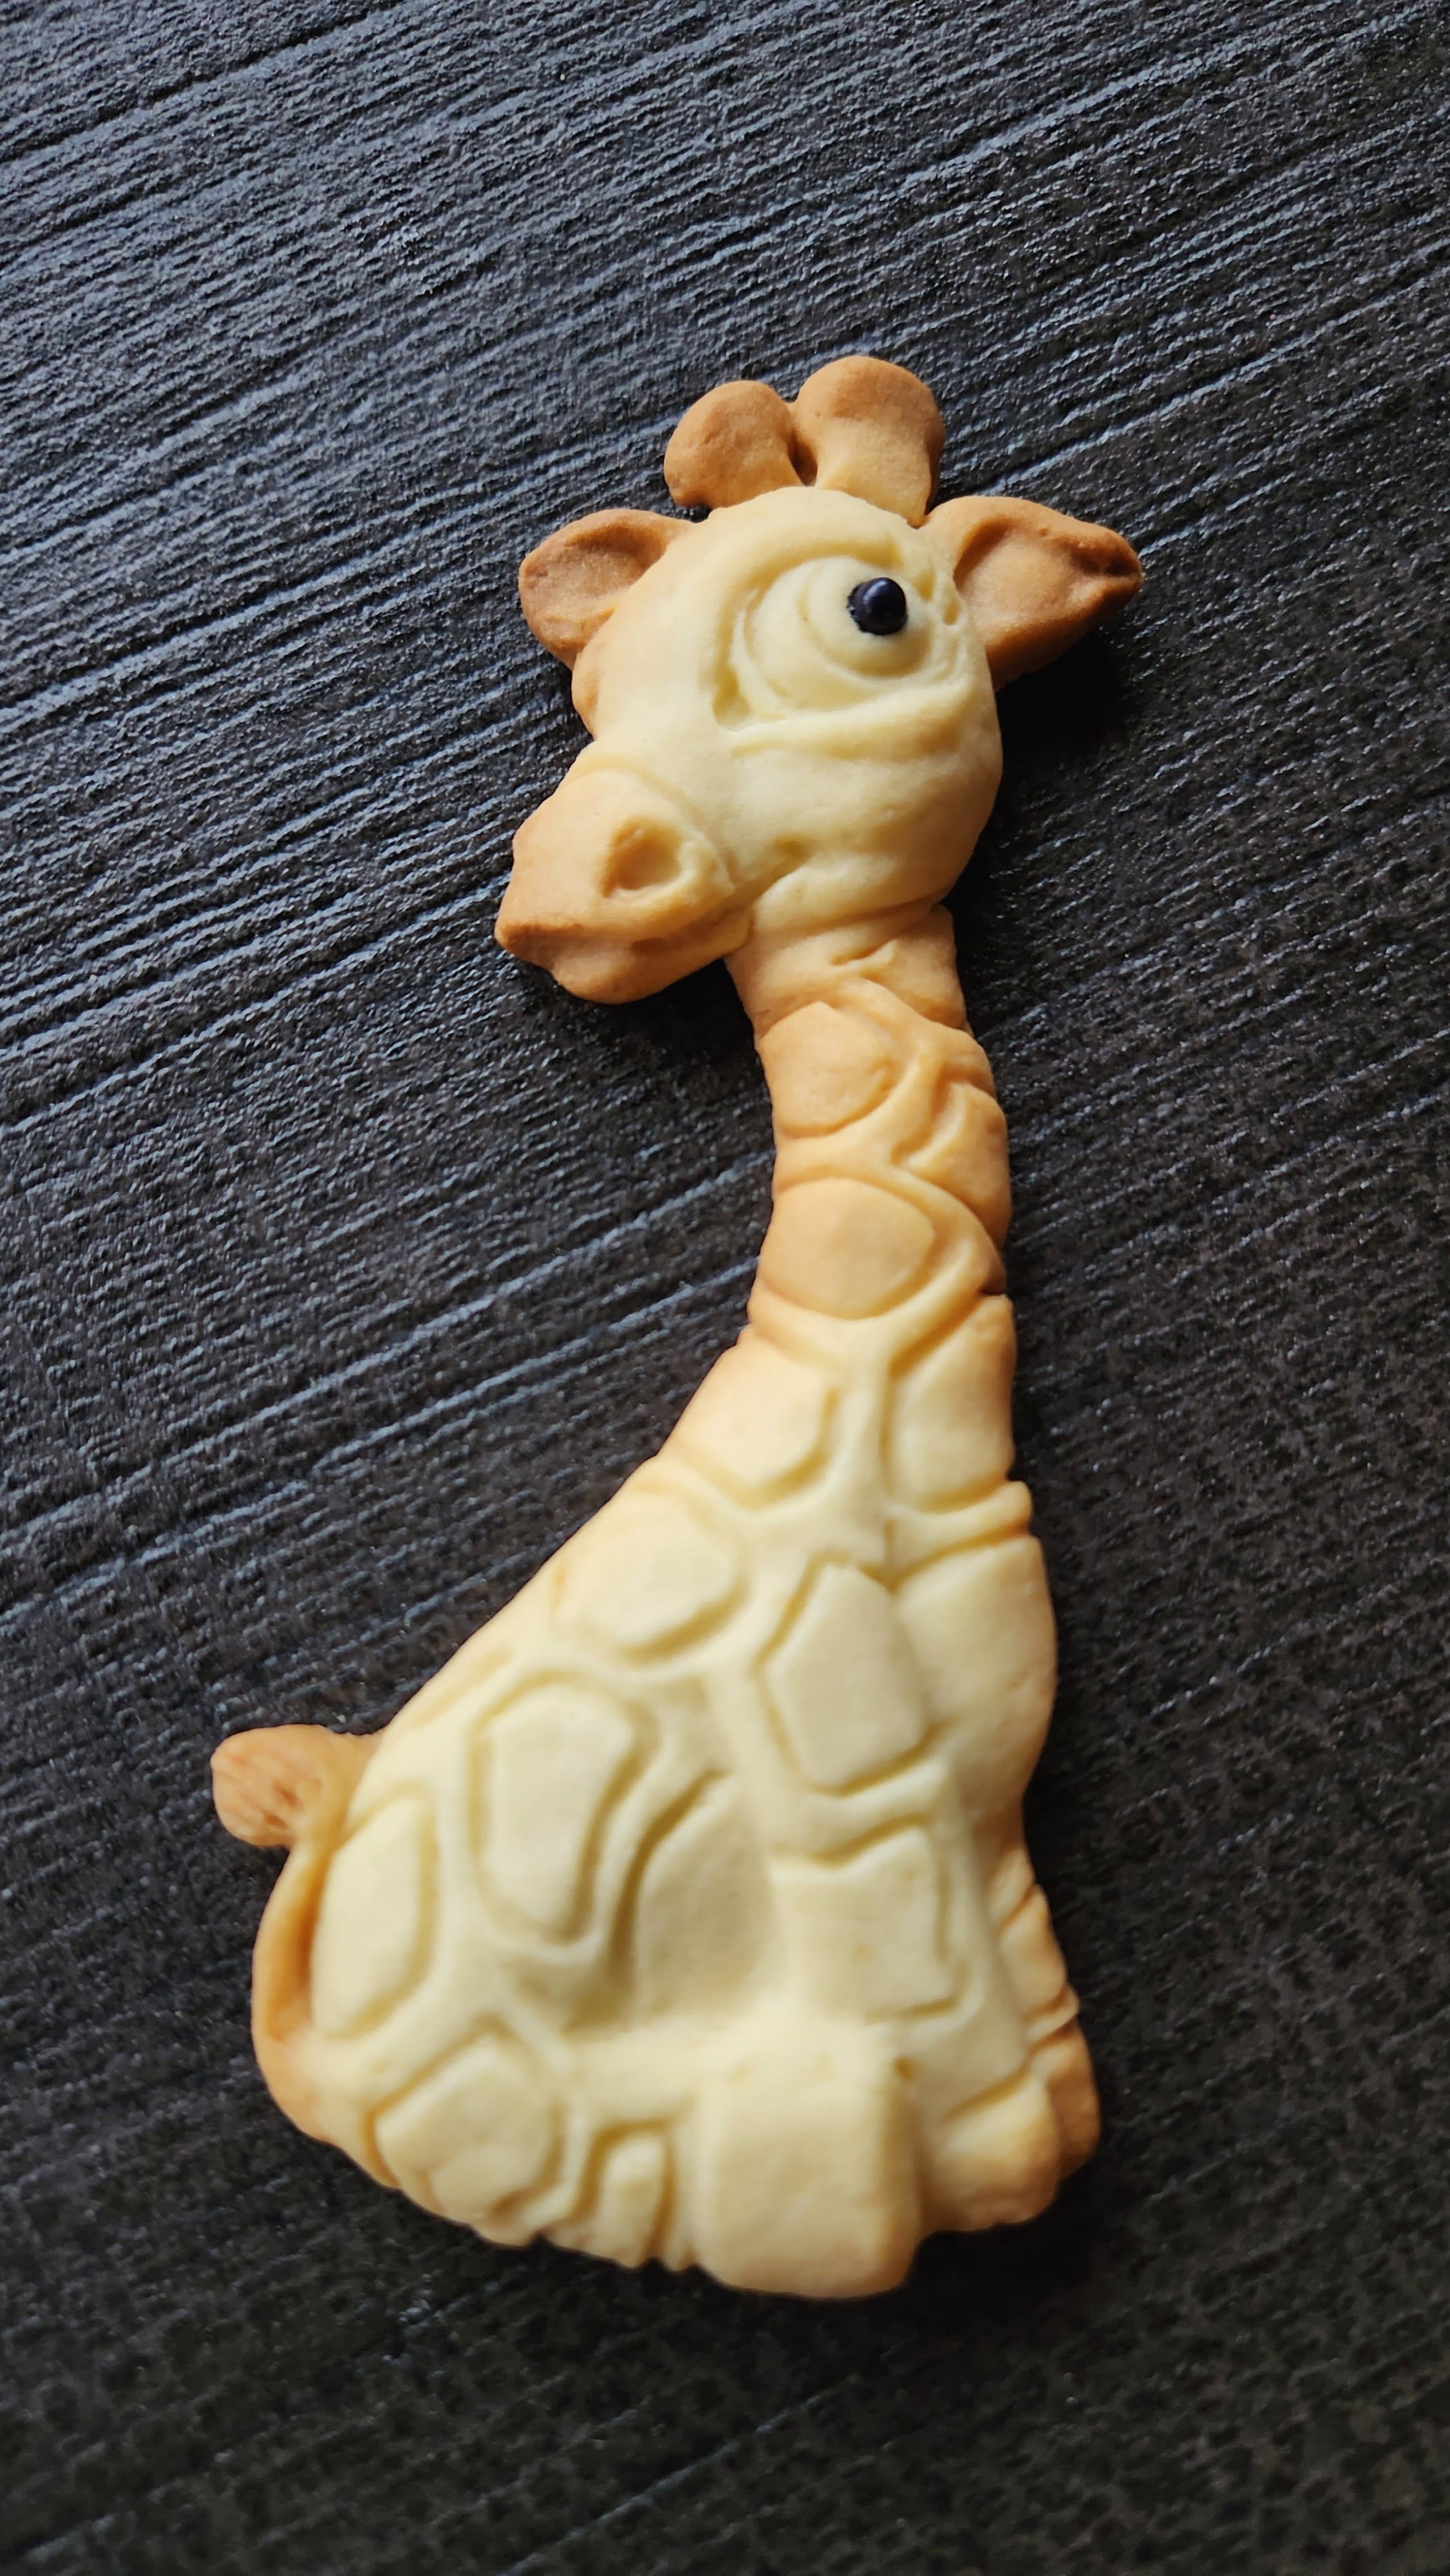 Giraffe Silicone Cookie Mold